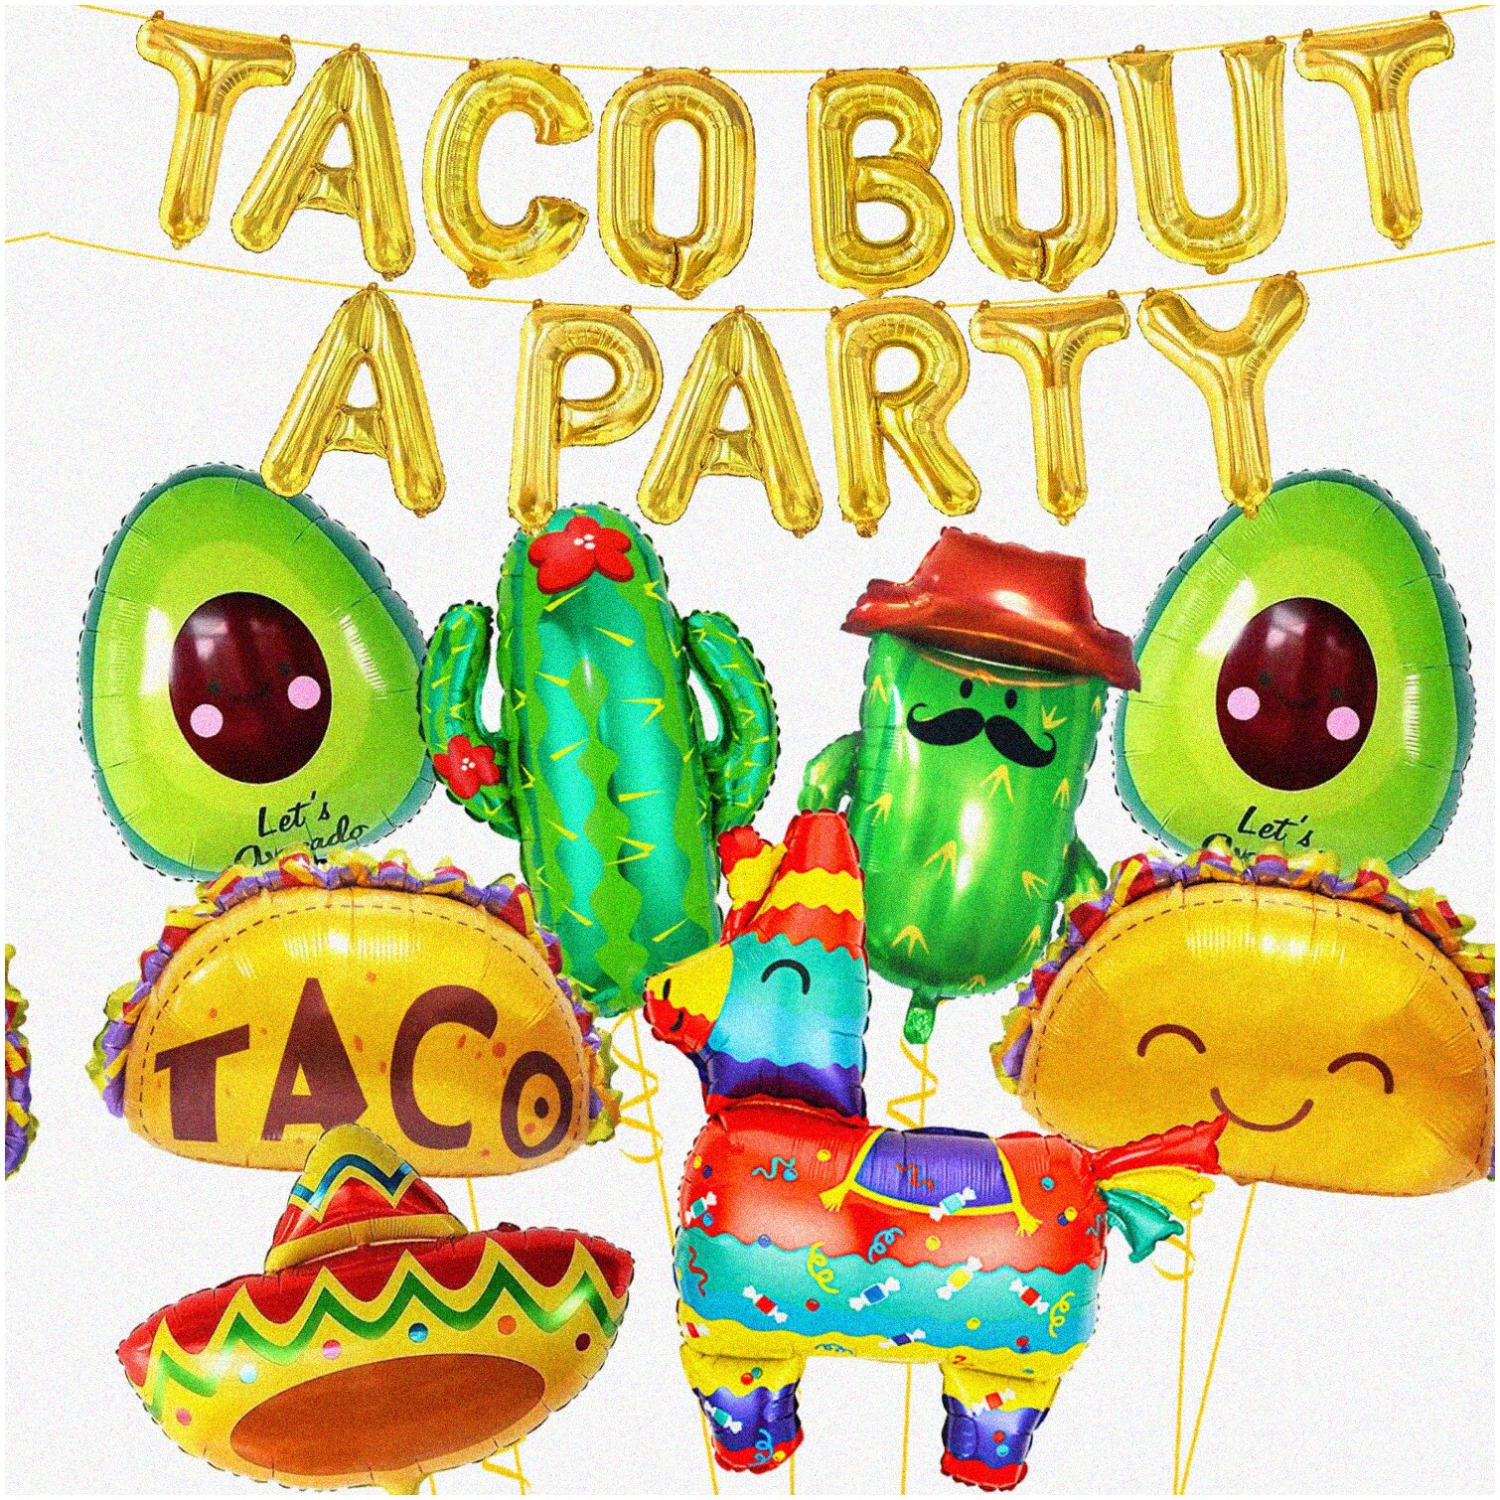 Fiesta Fun Pack: 24Pcs Taco Party Decorations with Mexican Balloons, Cactus, Avocado, Sombrero, Donkey - Cinco De Mayo Celebration Kit